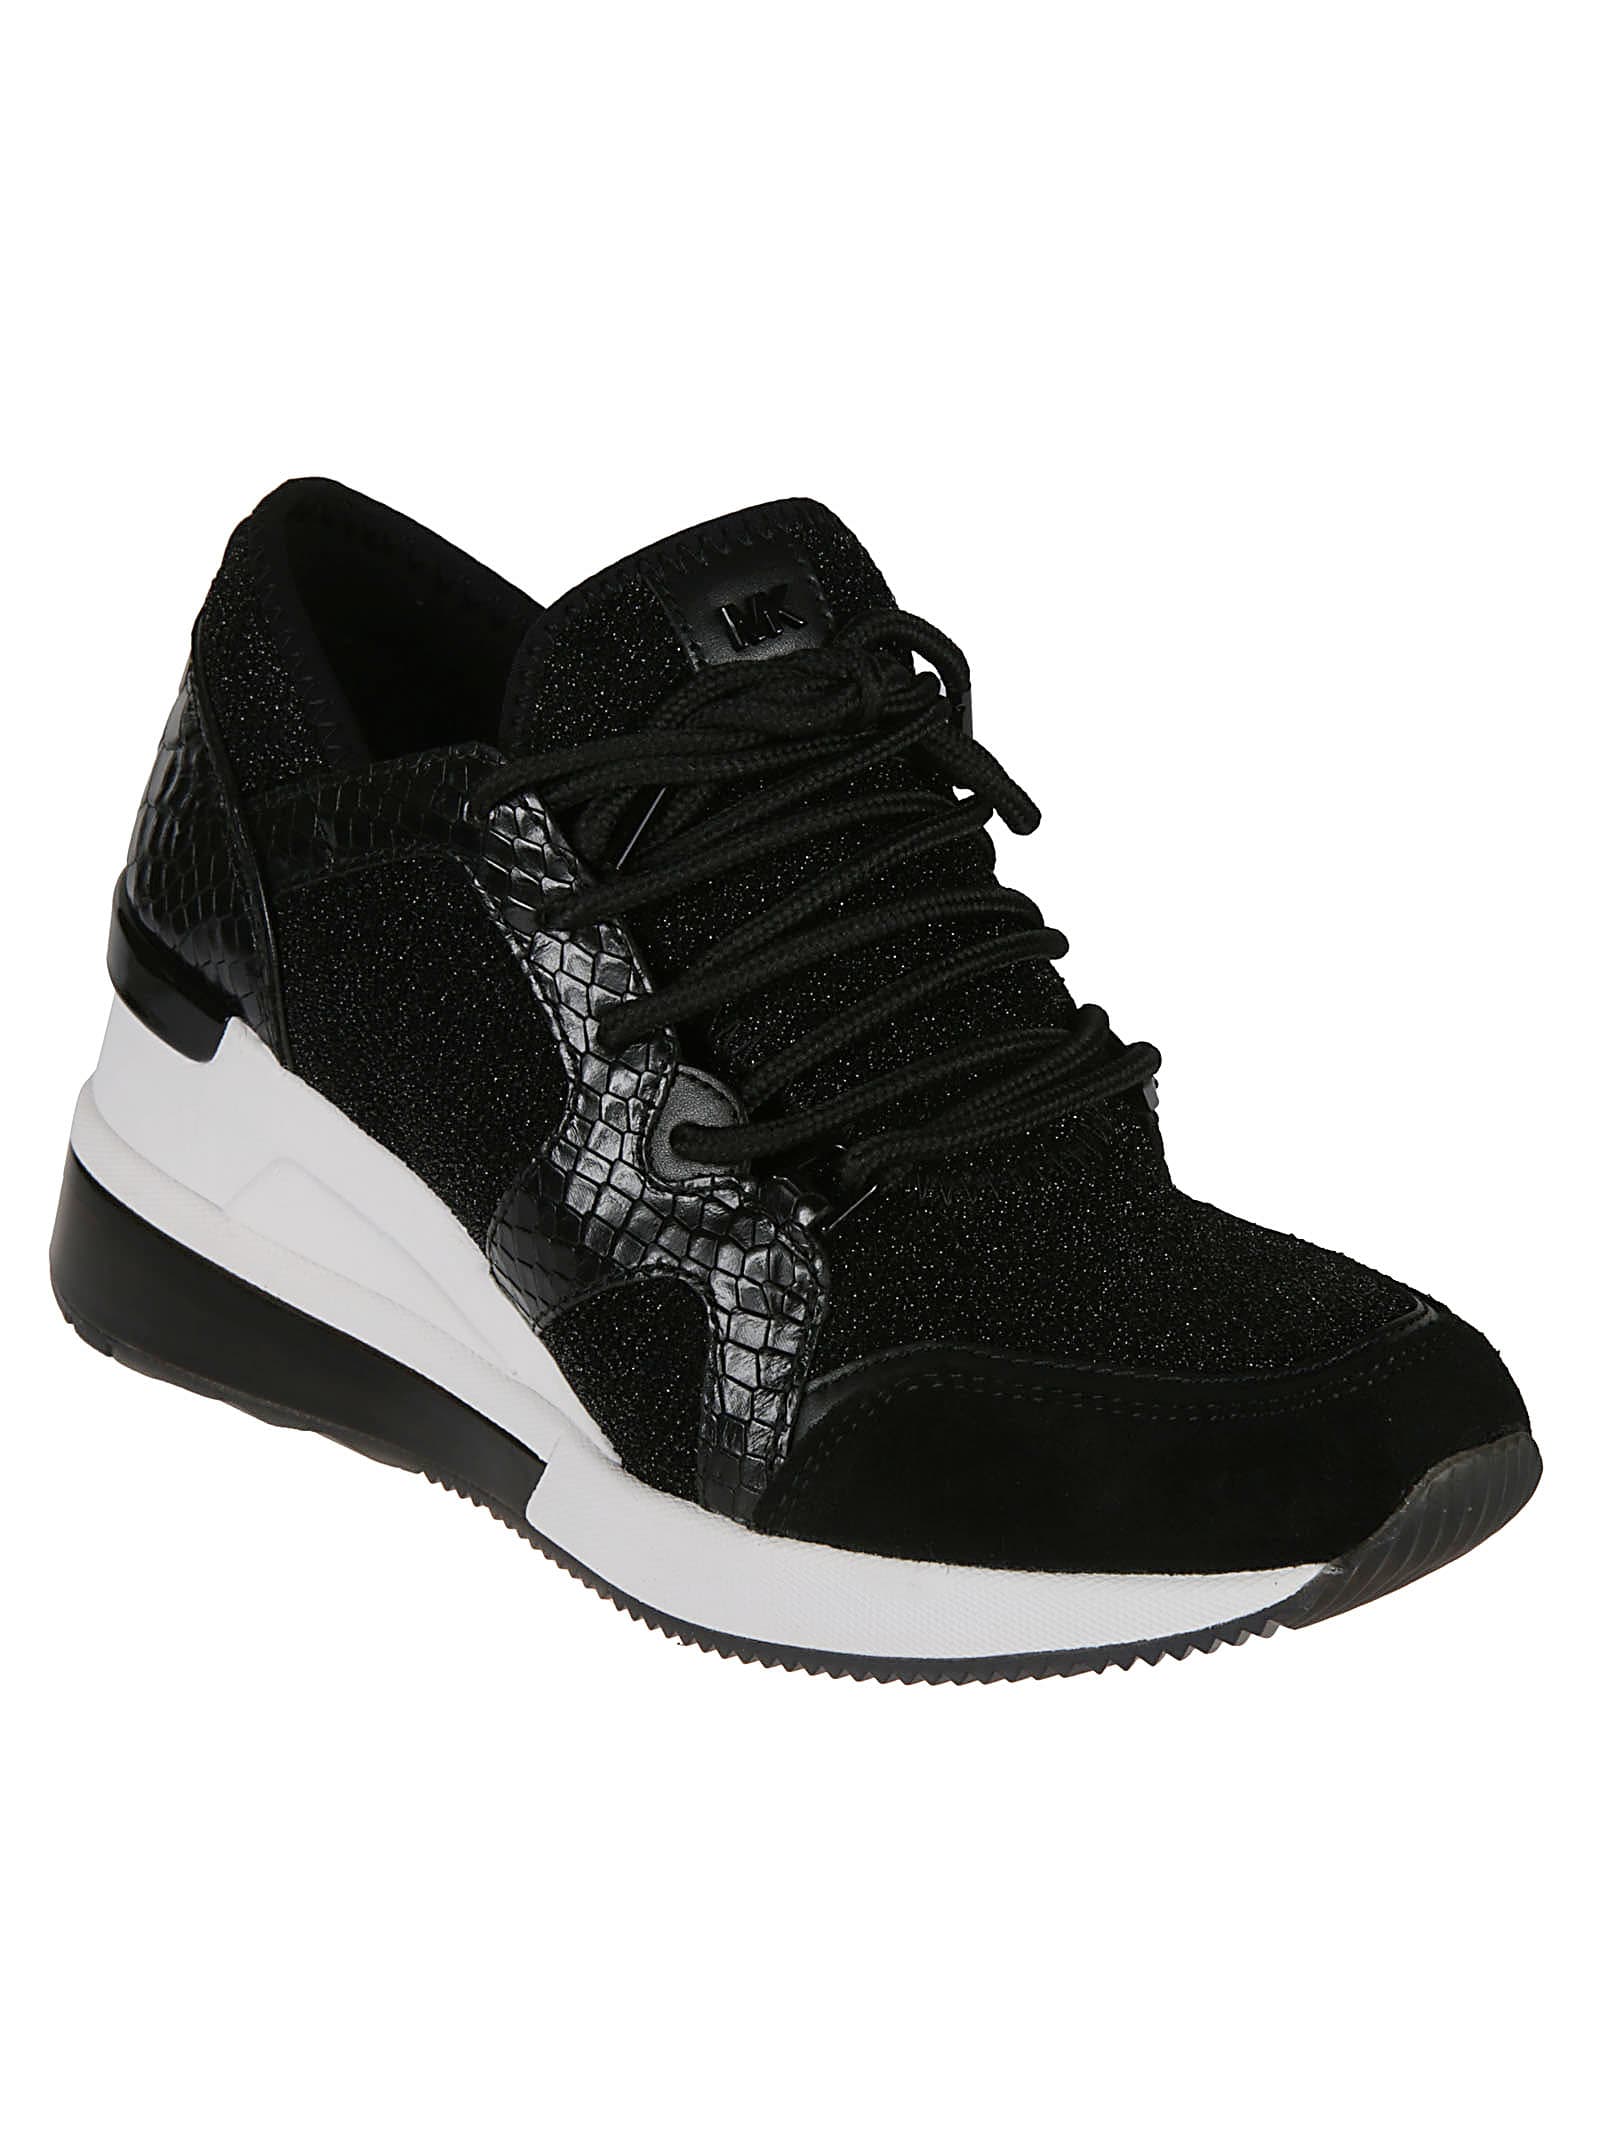 Michael Kors Michael Kors Liv Trainer Extreme Sneakers - black ...